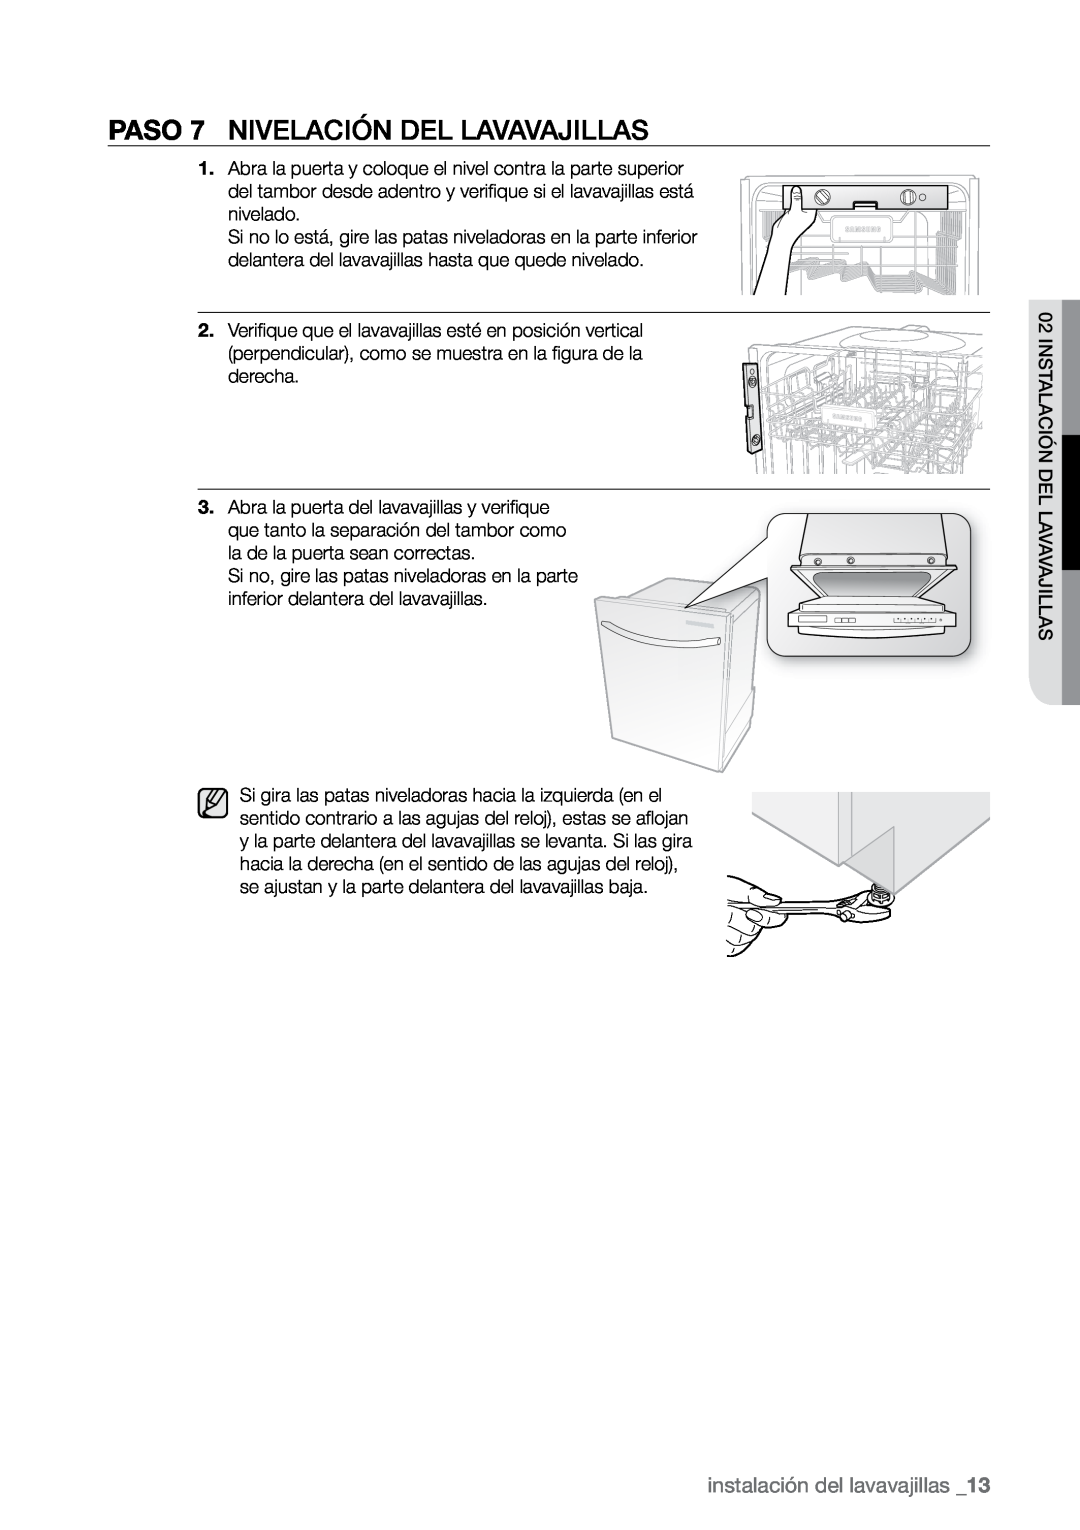 Samsung DMR57, DMR78, DMR77 manual PASO 7 Nivelación del lavavajillas, instalación del lavavajillas 